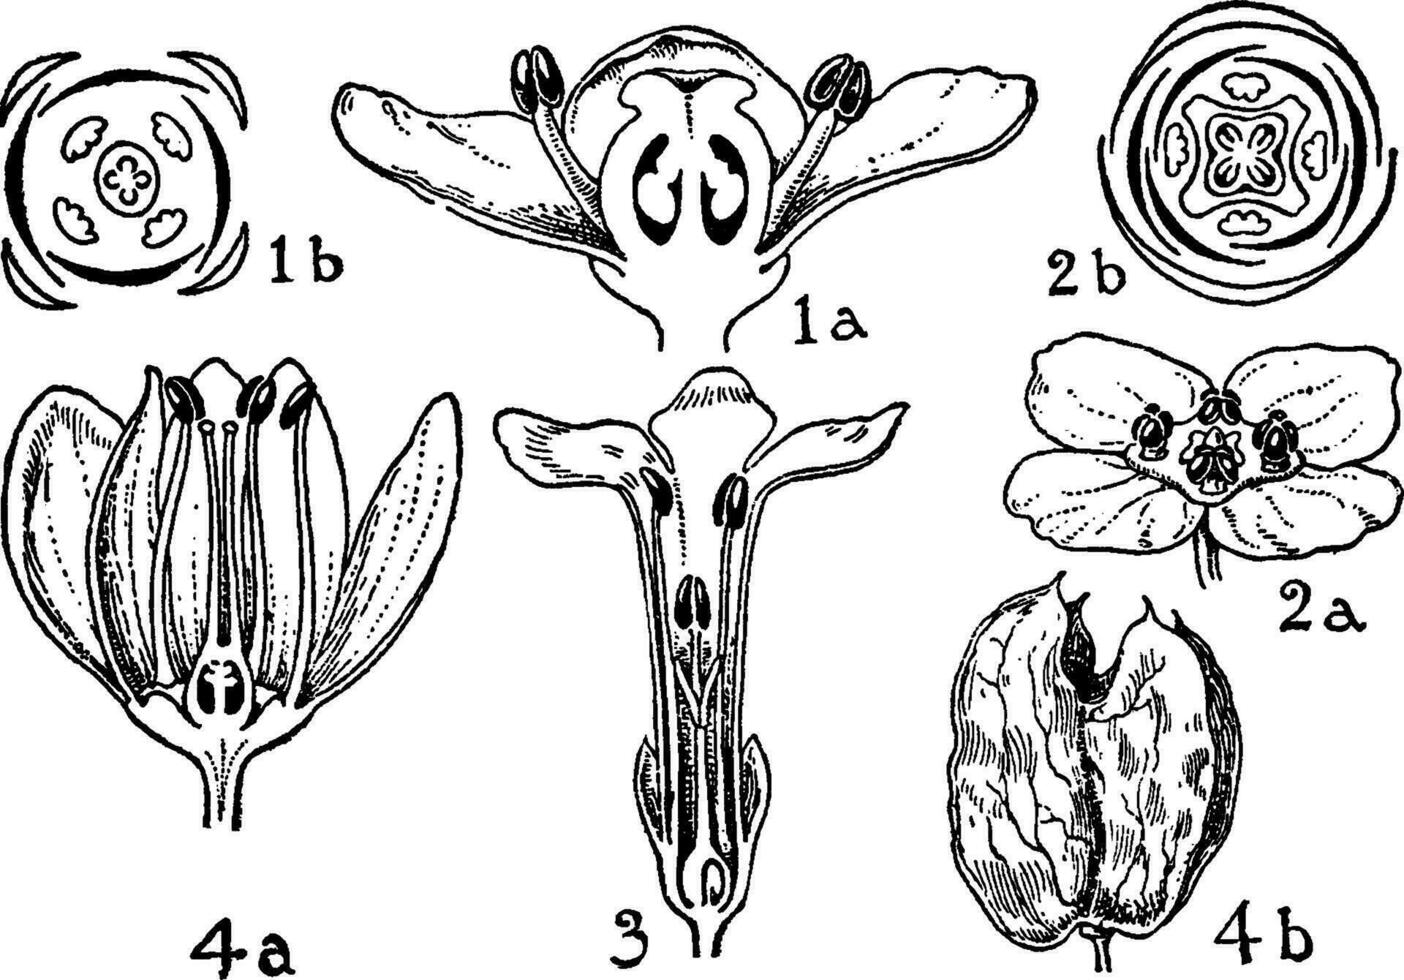 ordens do aquifoliáceas, celastráceas, stackhousiaceae, e estafileáceas vintage ilustração. vetor